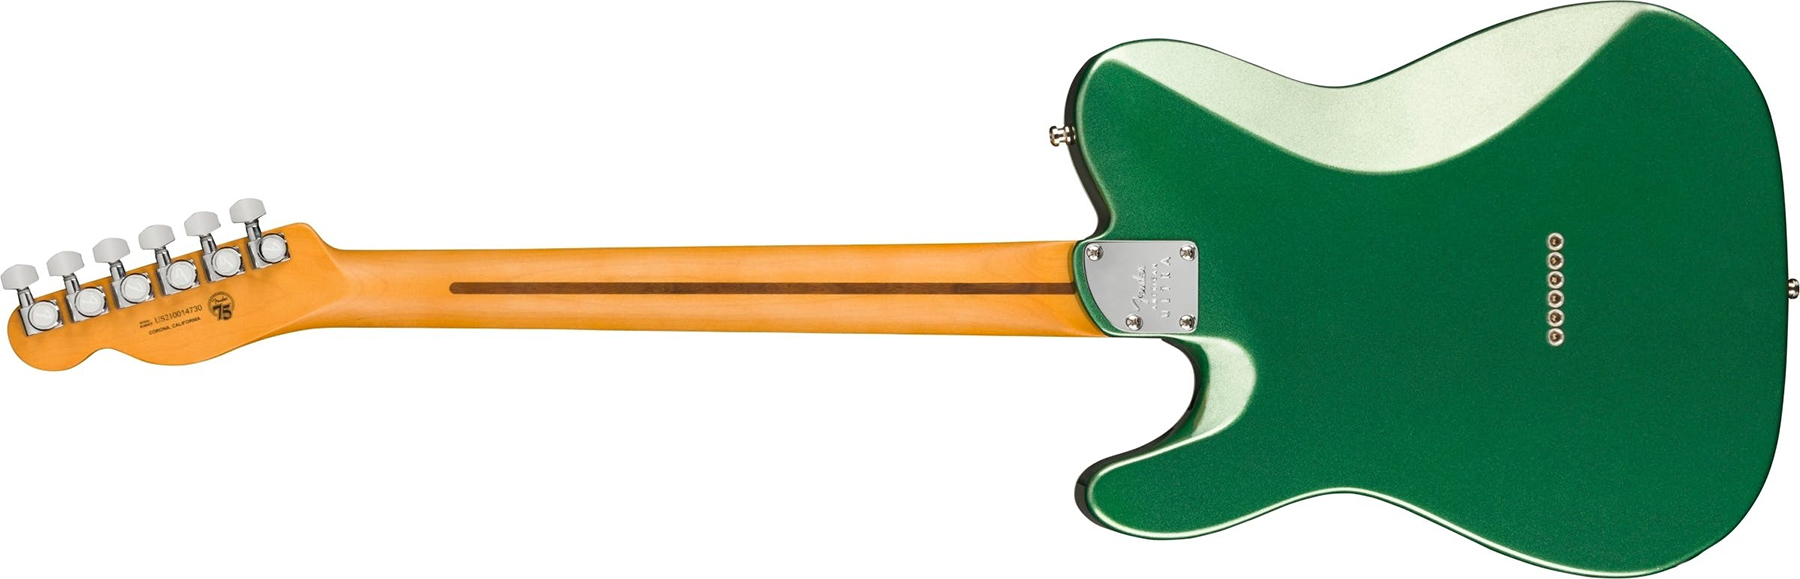 Fender Tele American Ultra Fsr Ltd Usa 2s Ht Eb - Mystic Pine Green - Guitarra eléctrica con forma de tel - Variation 1